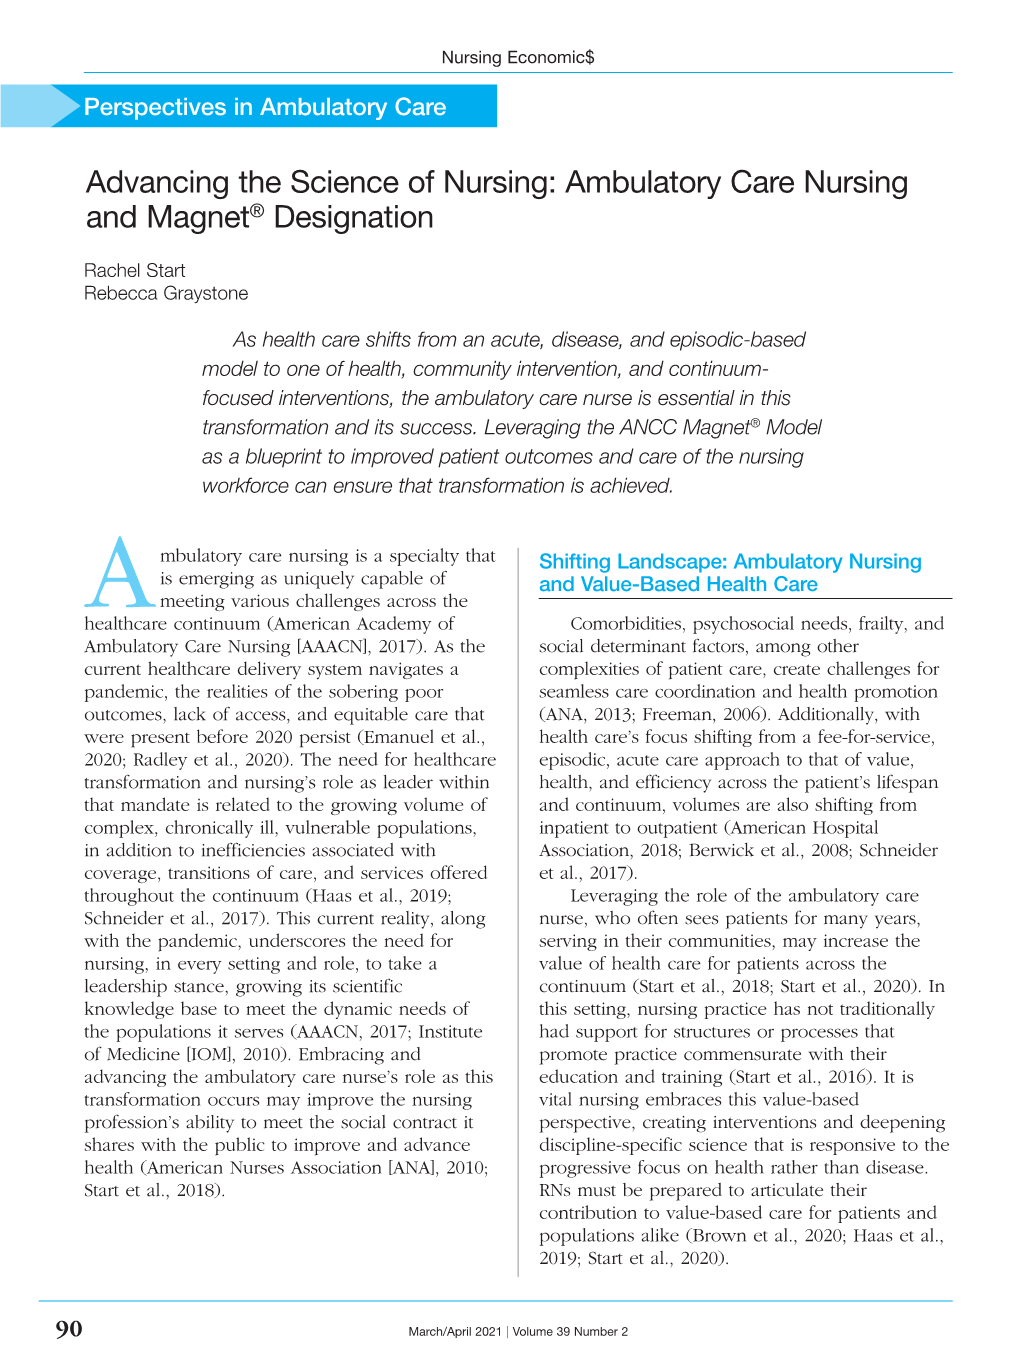 Ambulatory Care Nursing and Magnet® Designation